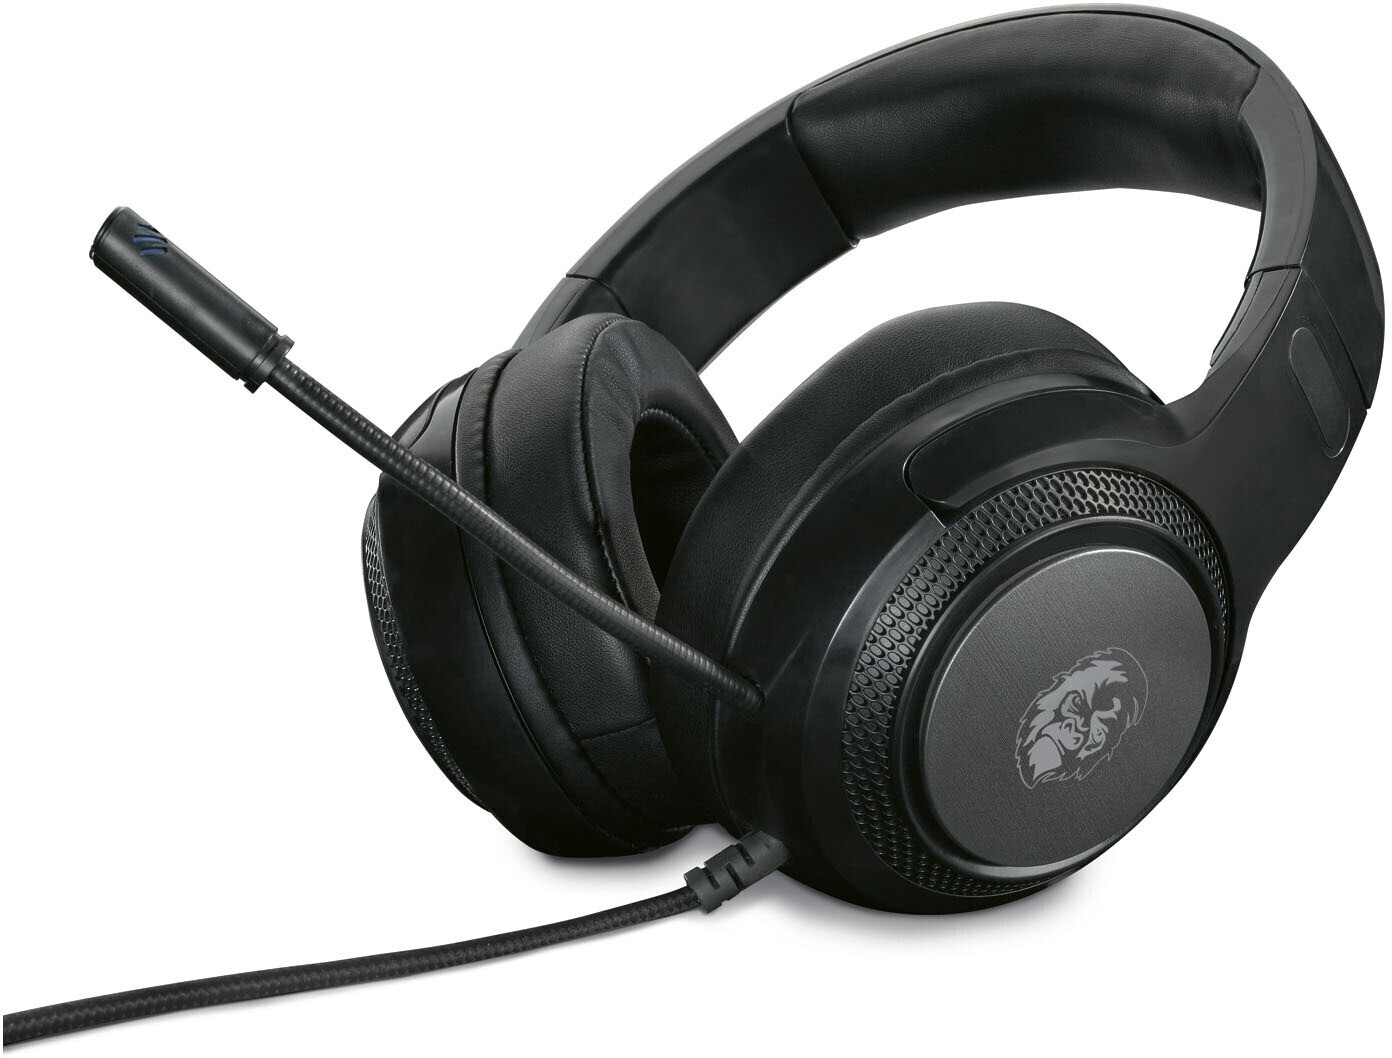 Headset kompatibel Preisvergleich € bei Gaming | Ear, On ab 29,99 Silvercrest universell